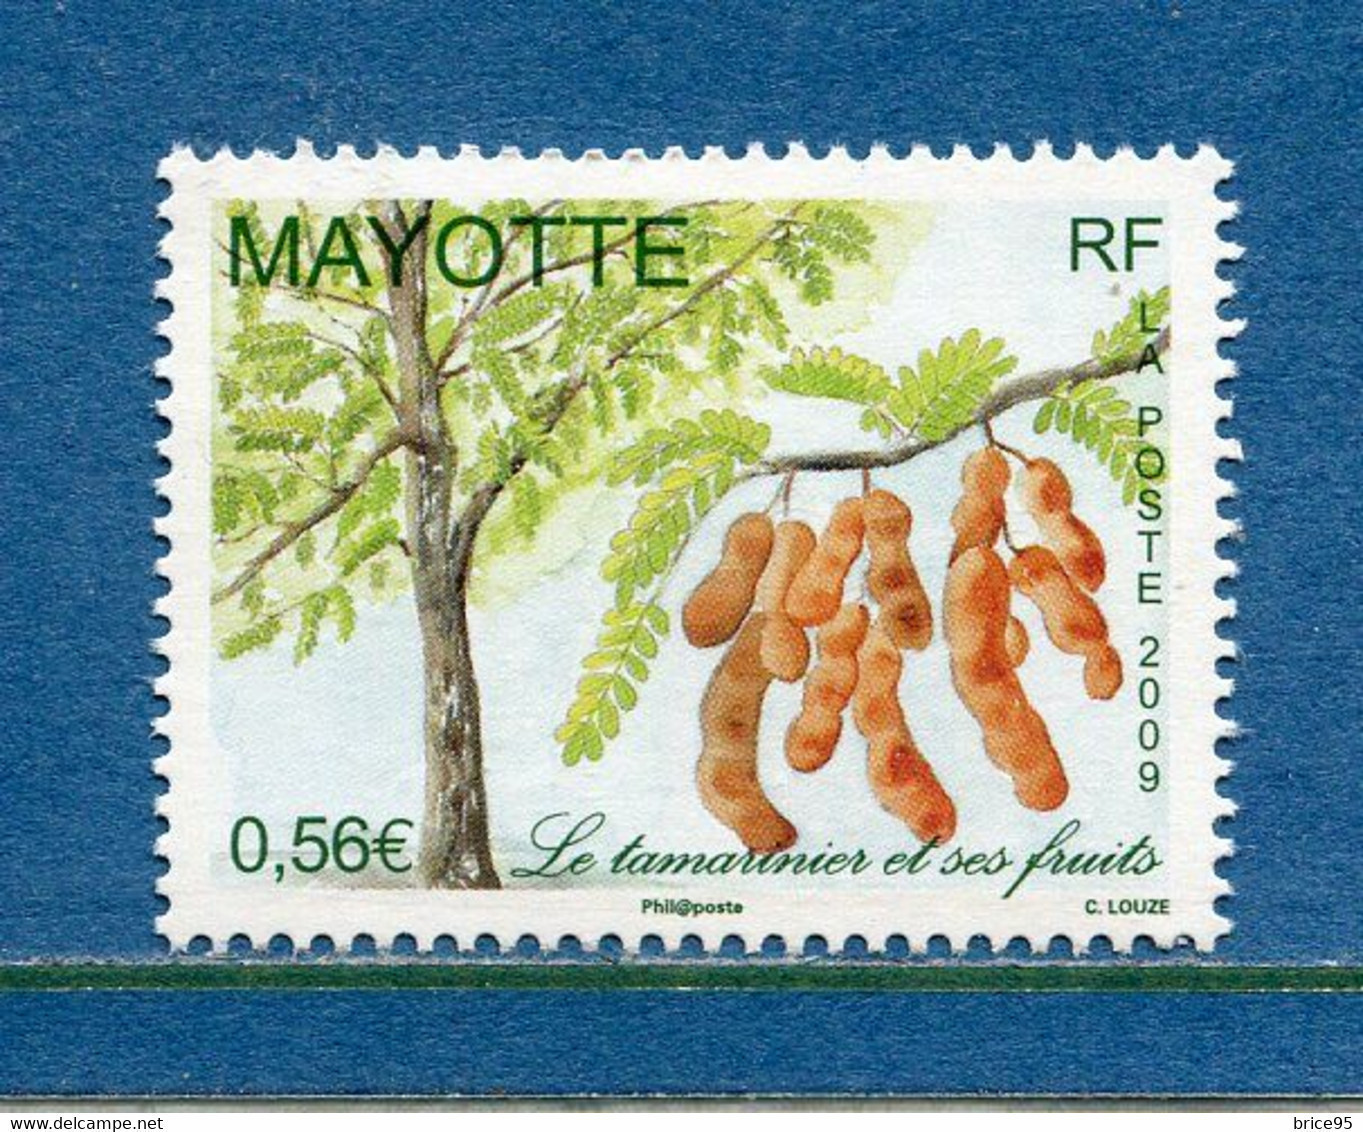 Mayotte - YT N° 223 ** - Neuf Sans Charnière - 2009 - Nuevos